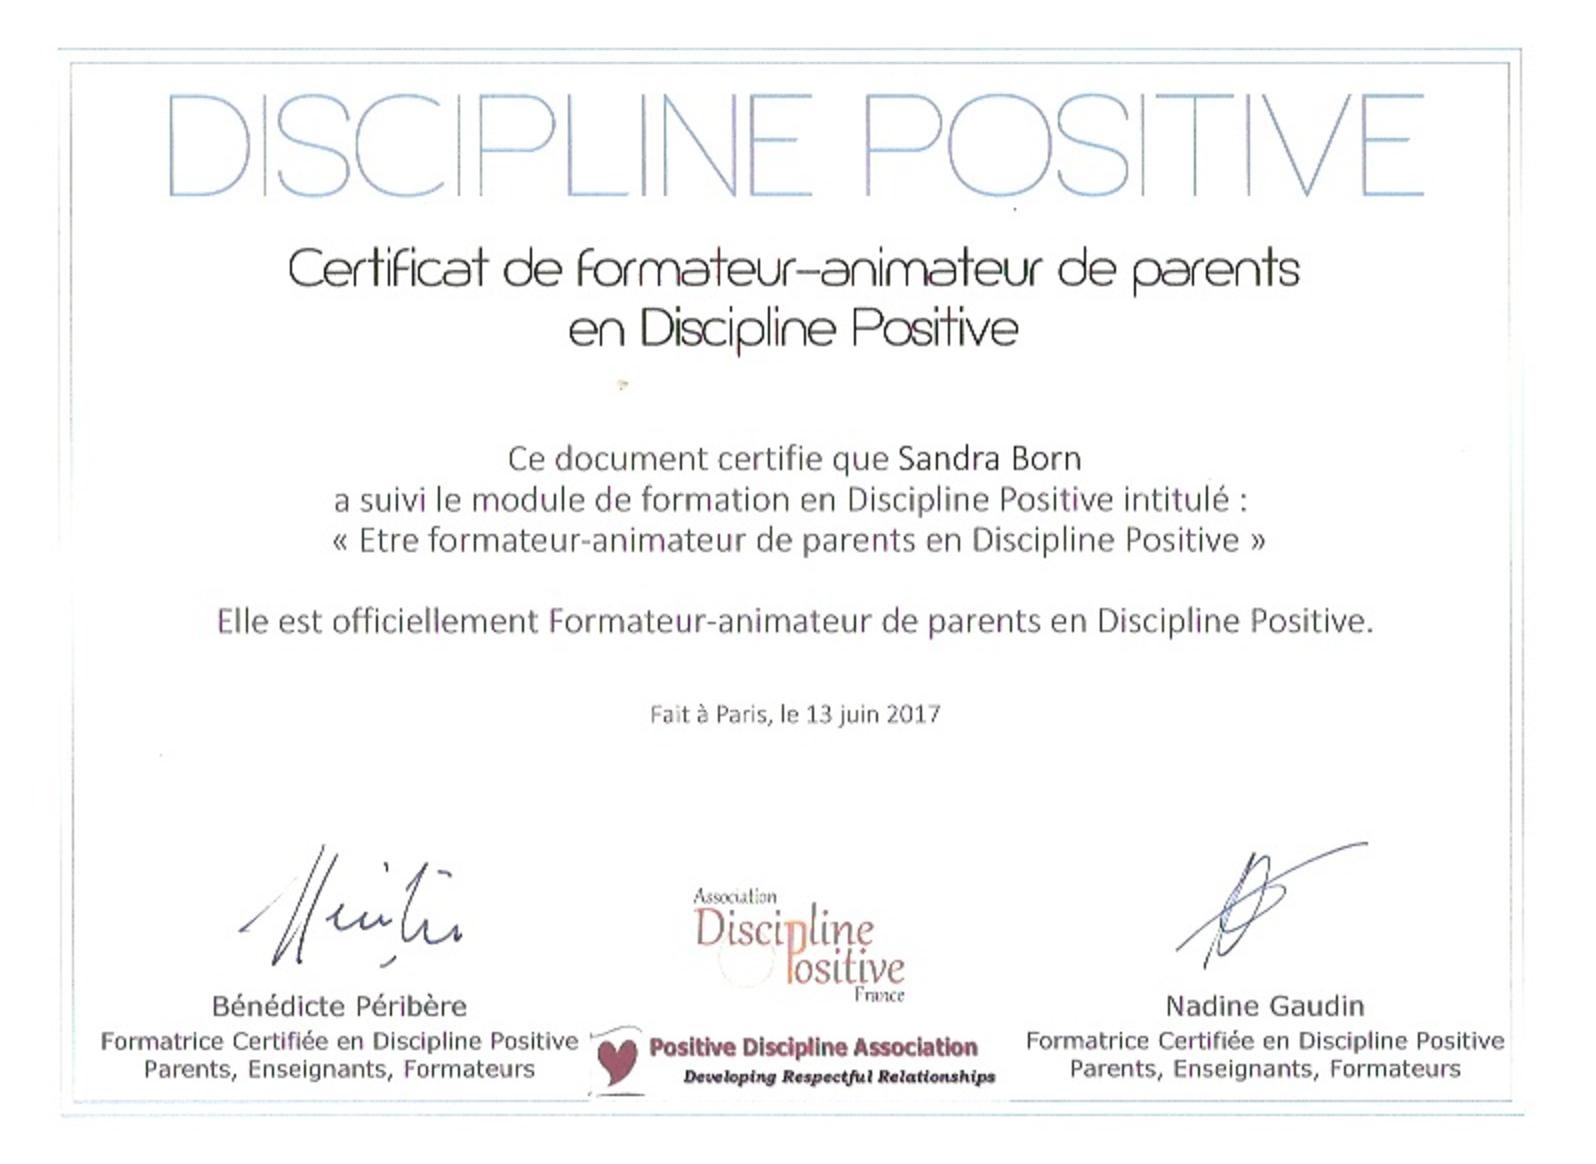 Positive Discipline - diploma